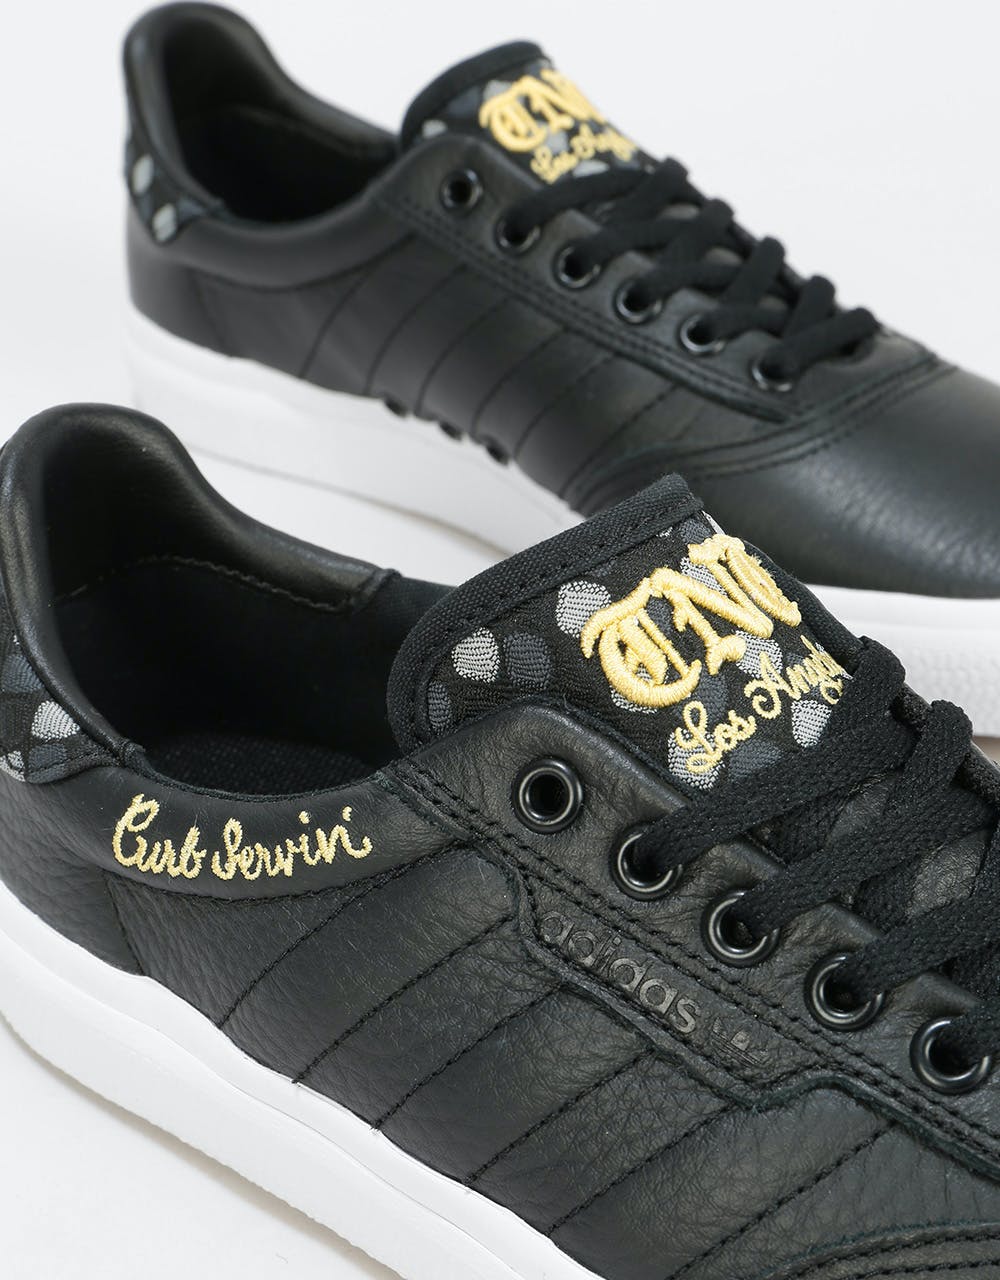 Adidas x TNT 3MC Skate Shoes - Black/White/Matte Gold